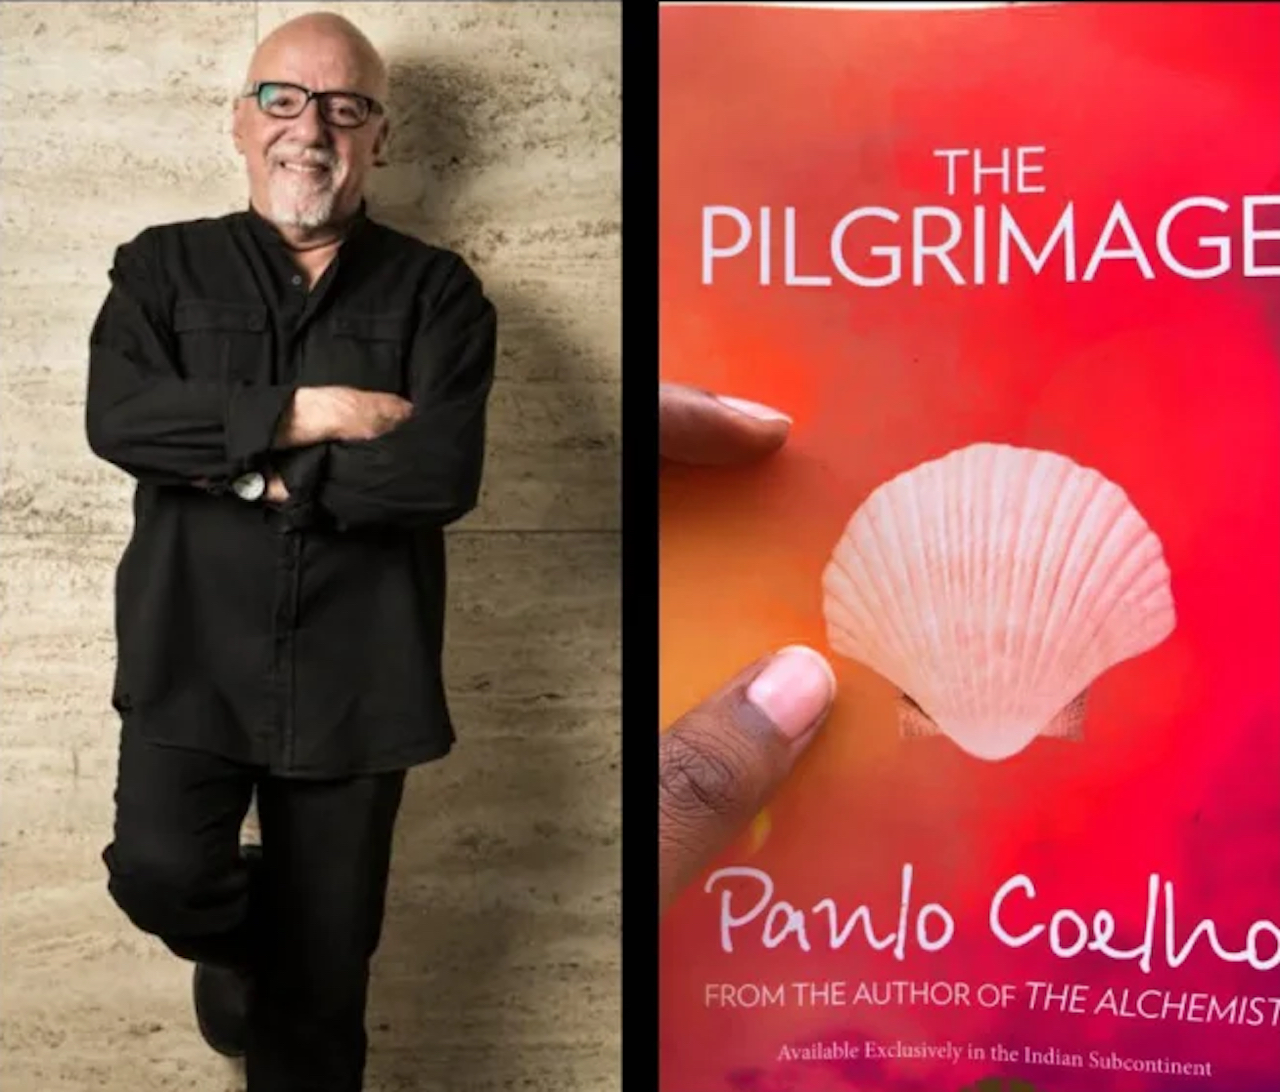 "The Pilgrimage" by Paulo Coelho